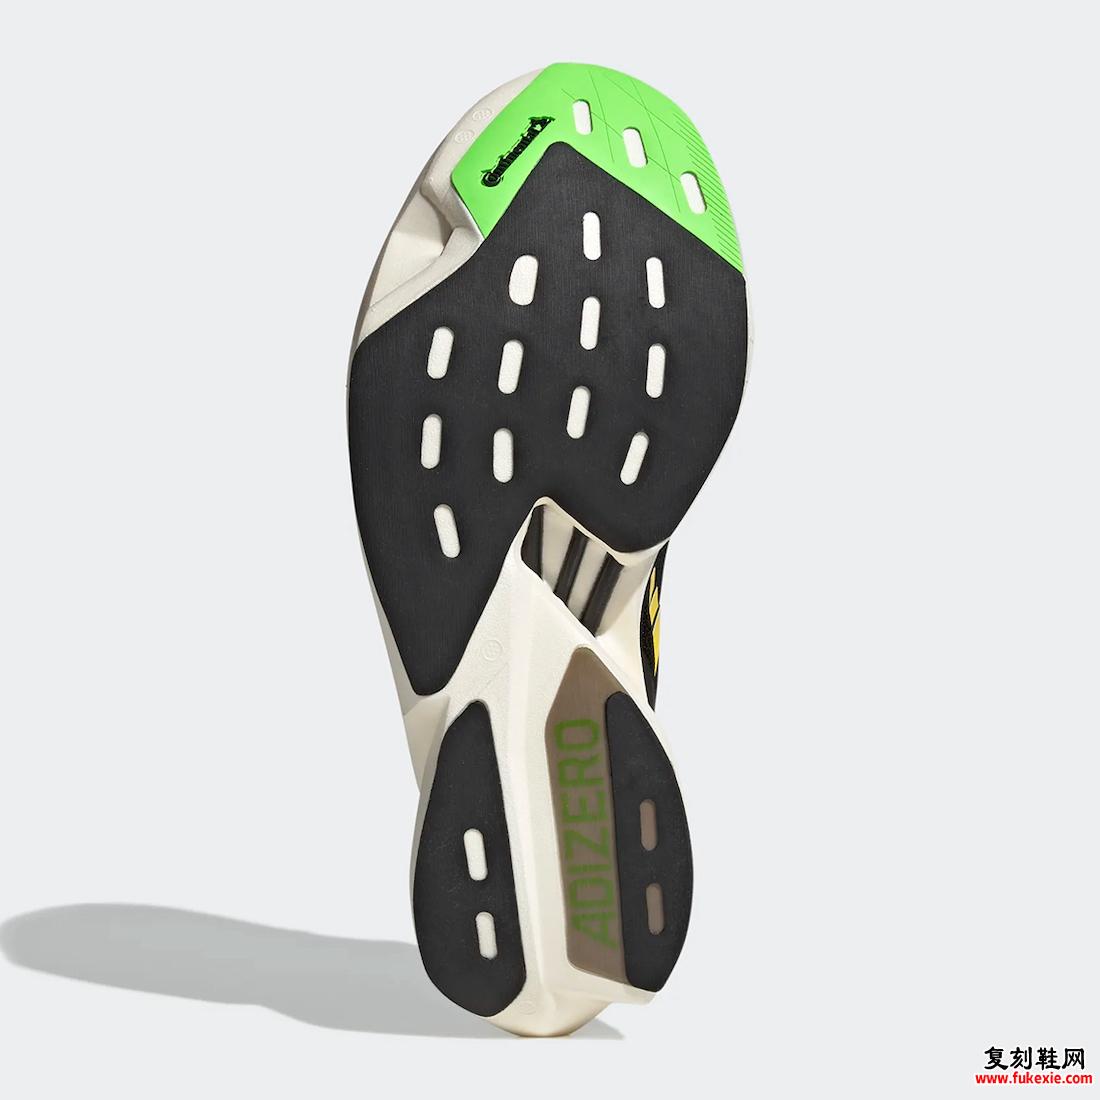 adidas Adizero Adios Pro 3 Core Black Beam Yellow Solar Green GX6251 发布日期